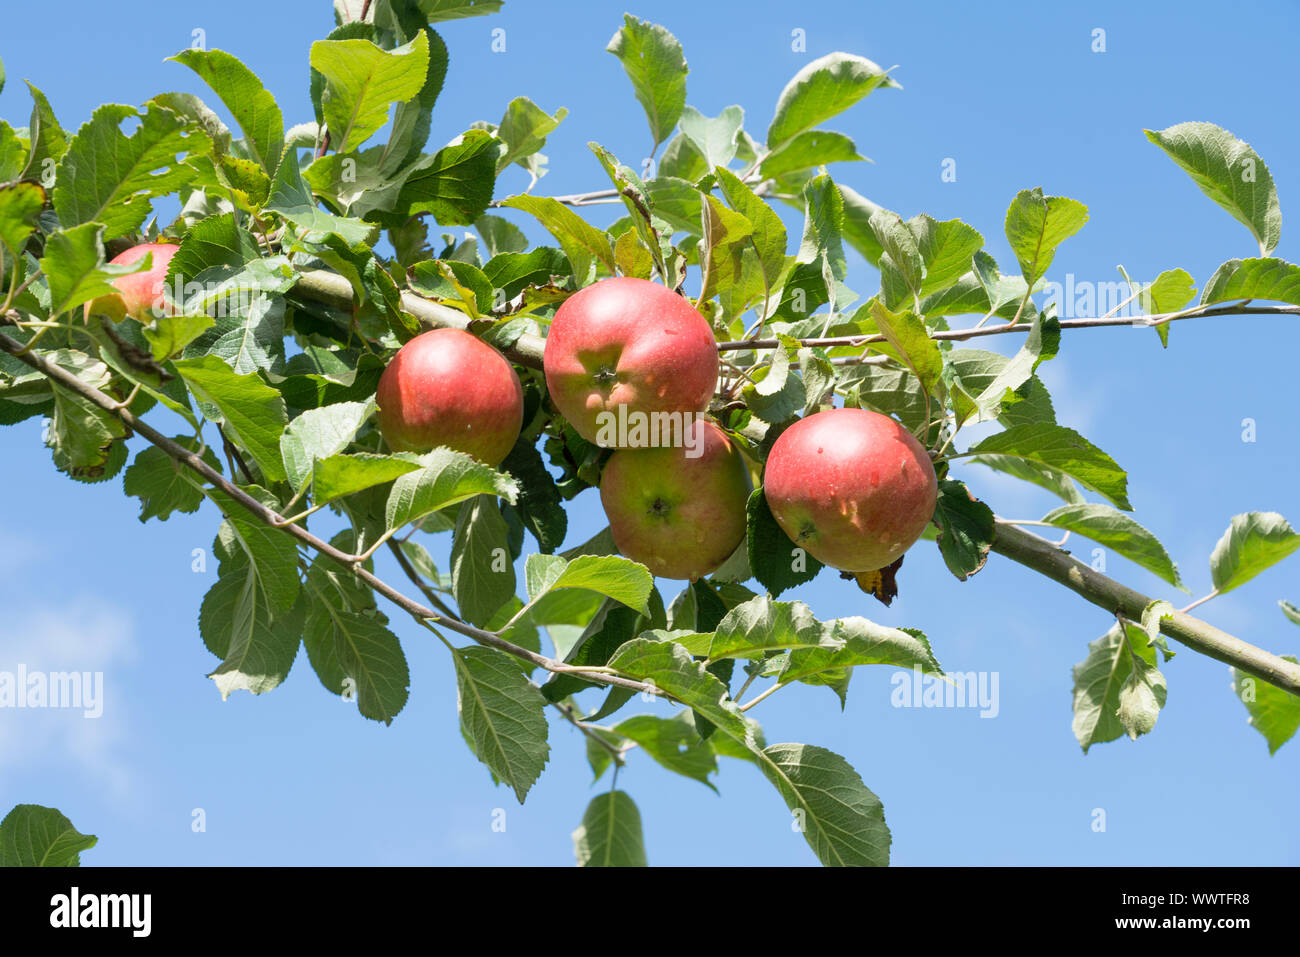 Pannemanns Tafelapfel, apple, old variety, Germany, Europe Stock Photo